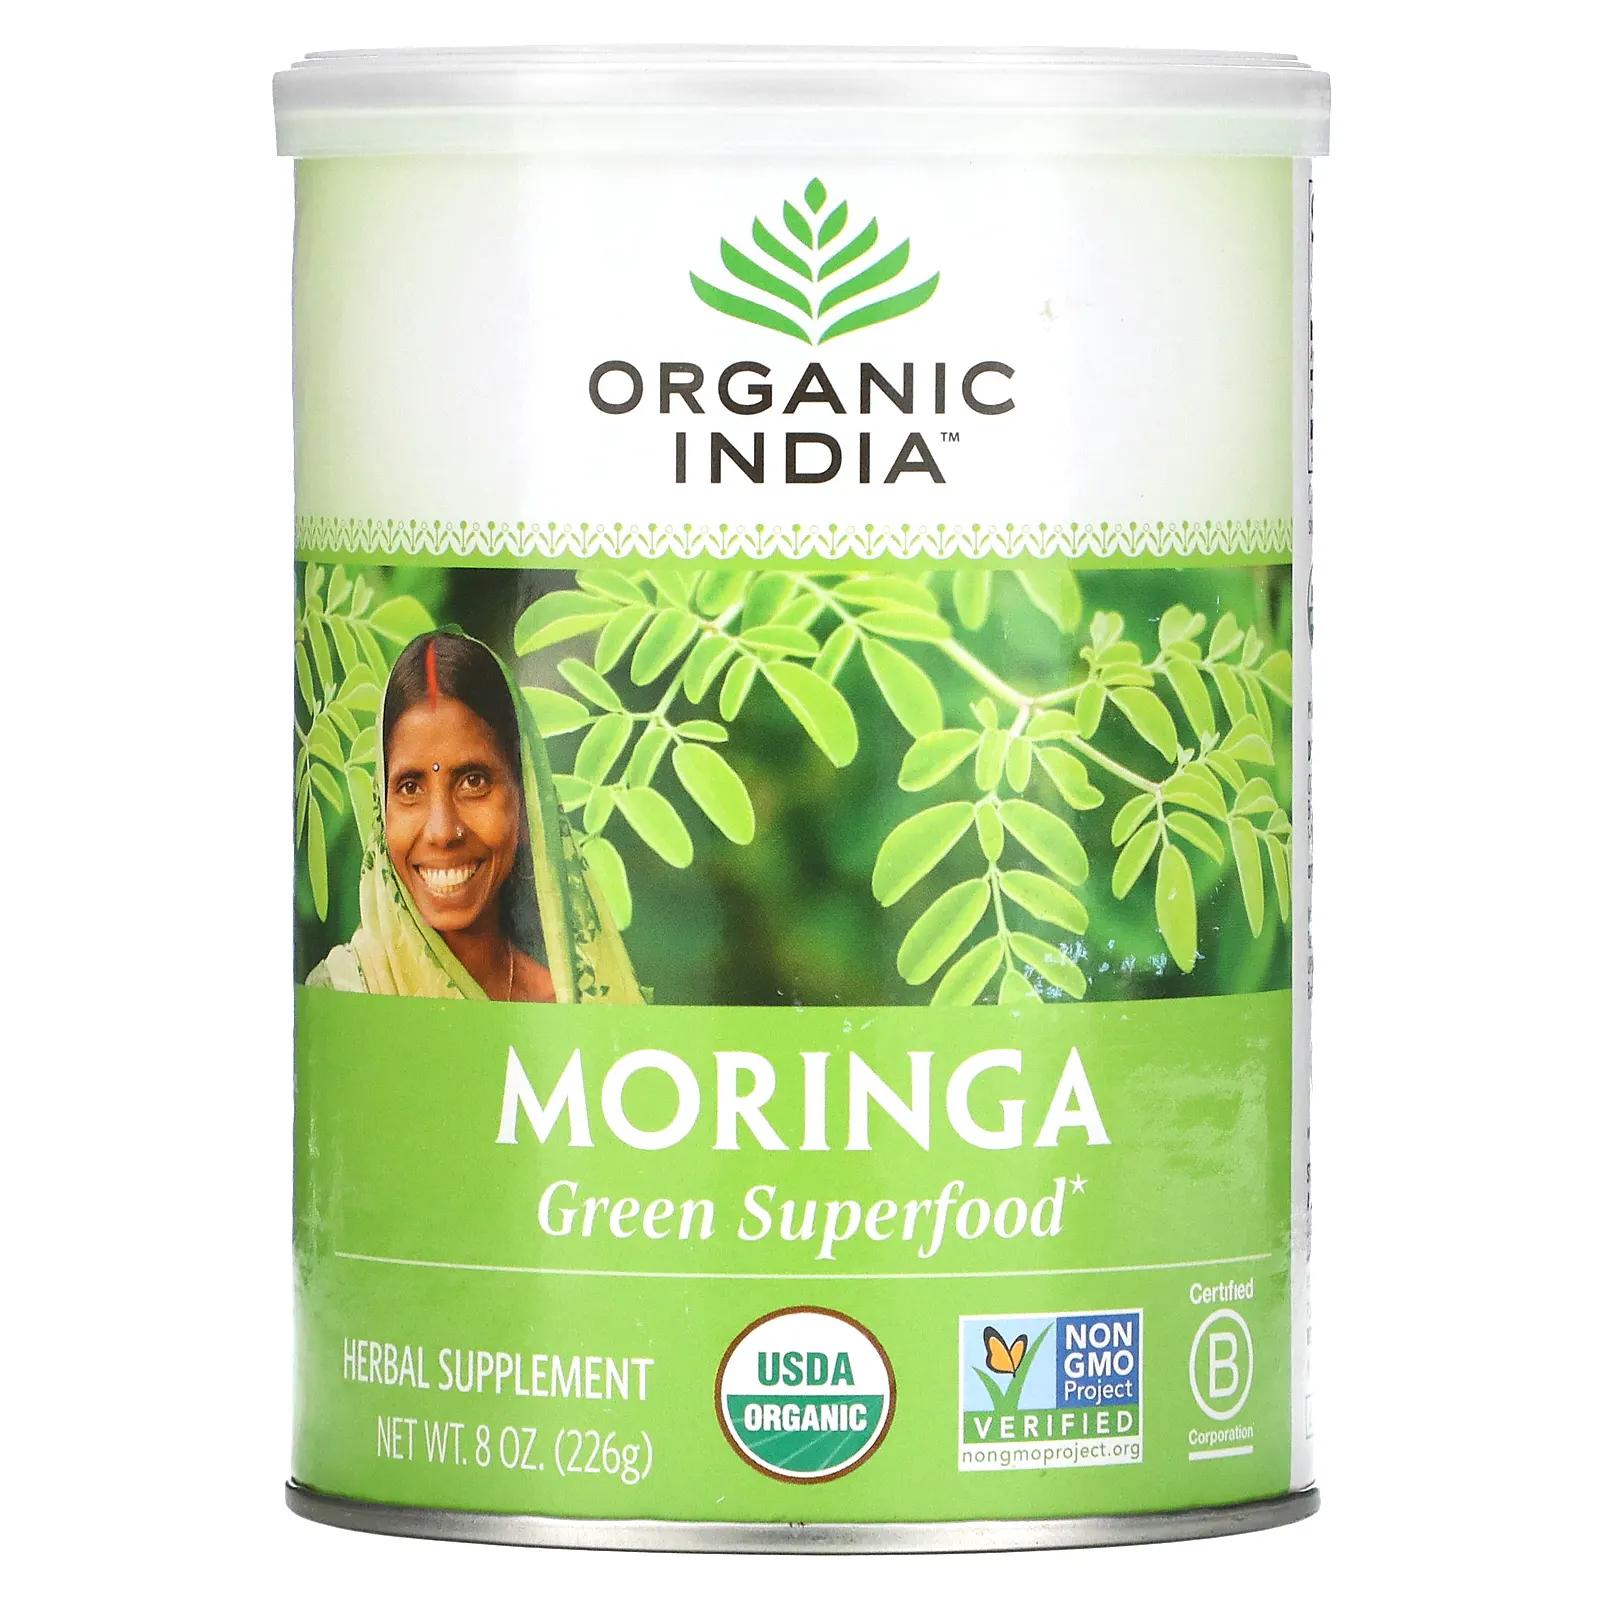 india Organic India Порошок листов органической моринги 8 унц. (226 г)